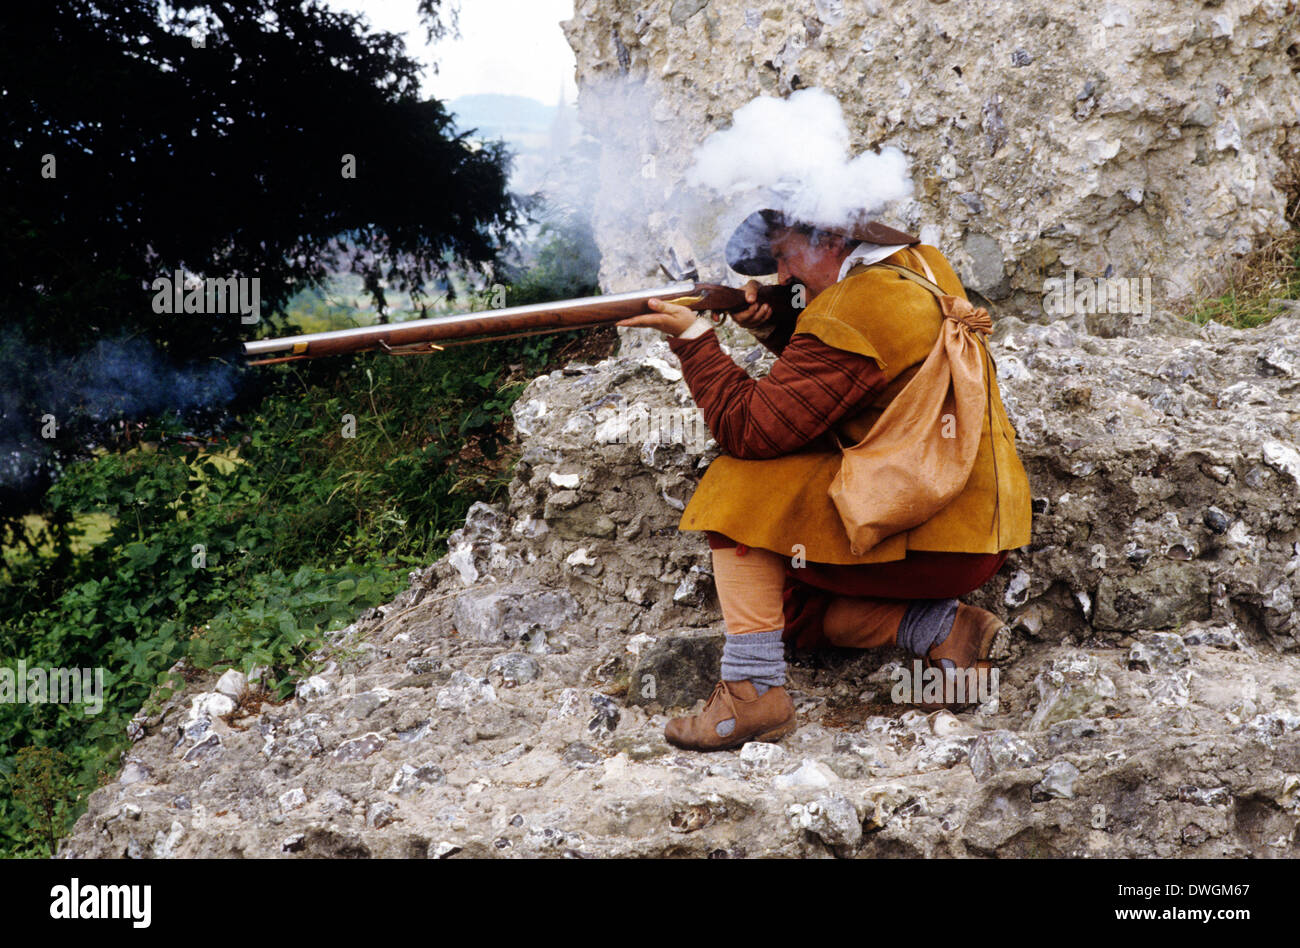 Englischer Bürgerkrieg Musketier, feuern Muskete, Rauchen Armee Soldat Soldaten 17. Jahrhundert Reenactment England UK Stockfoto